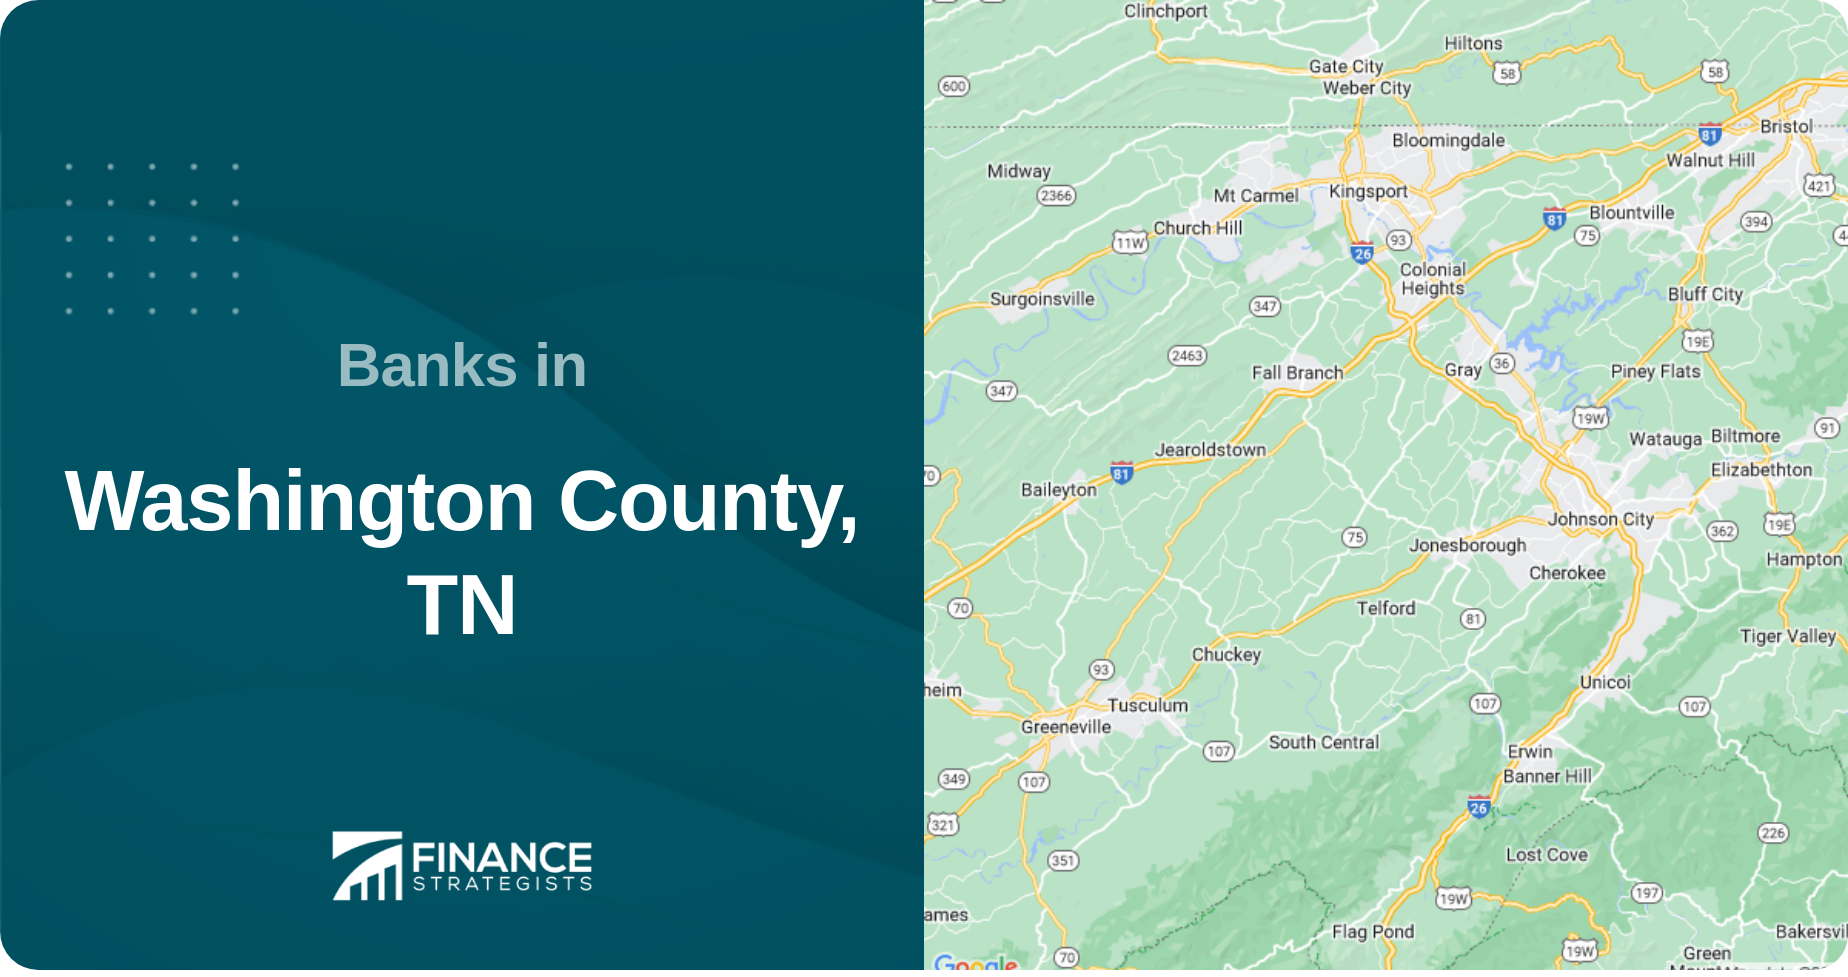 Banks in Washington County, TN